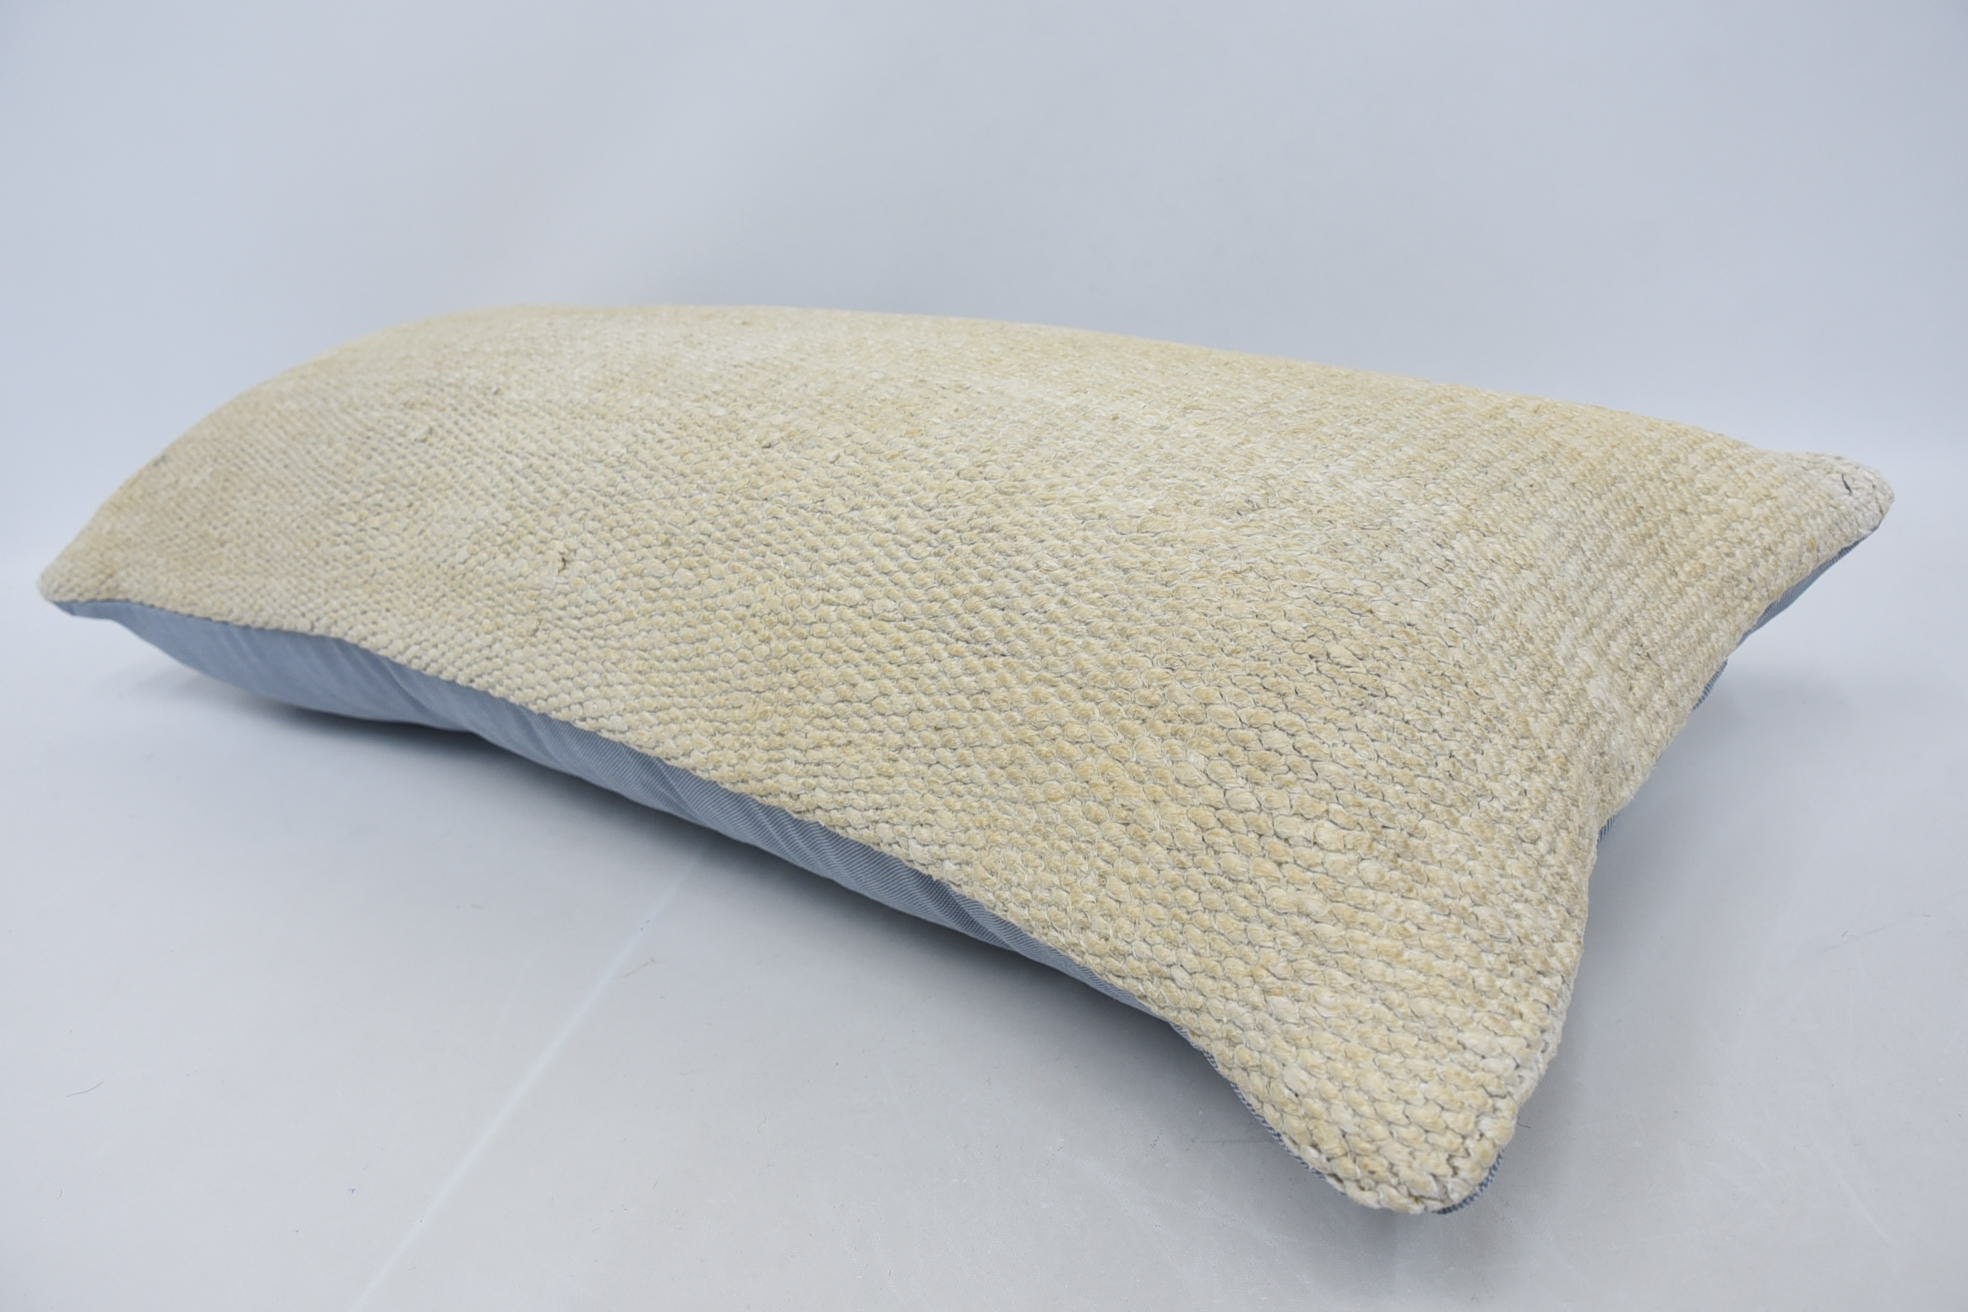 Pillow for Sofa, 16"x36" White Pillow, Bed Pillow Cover, Retro Pillow Cover, Antique Pillows, Throw Kilim Pillow